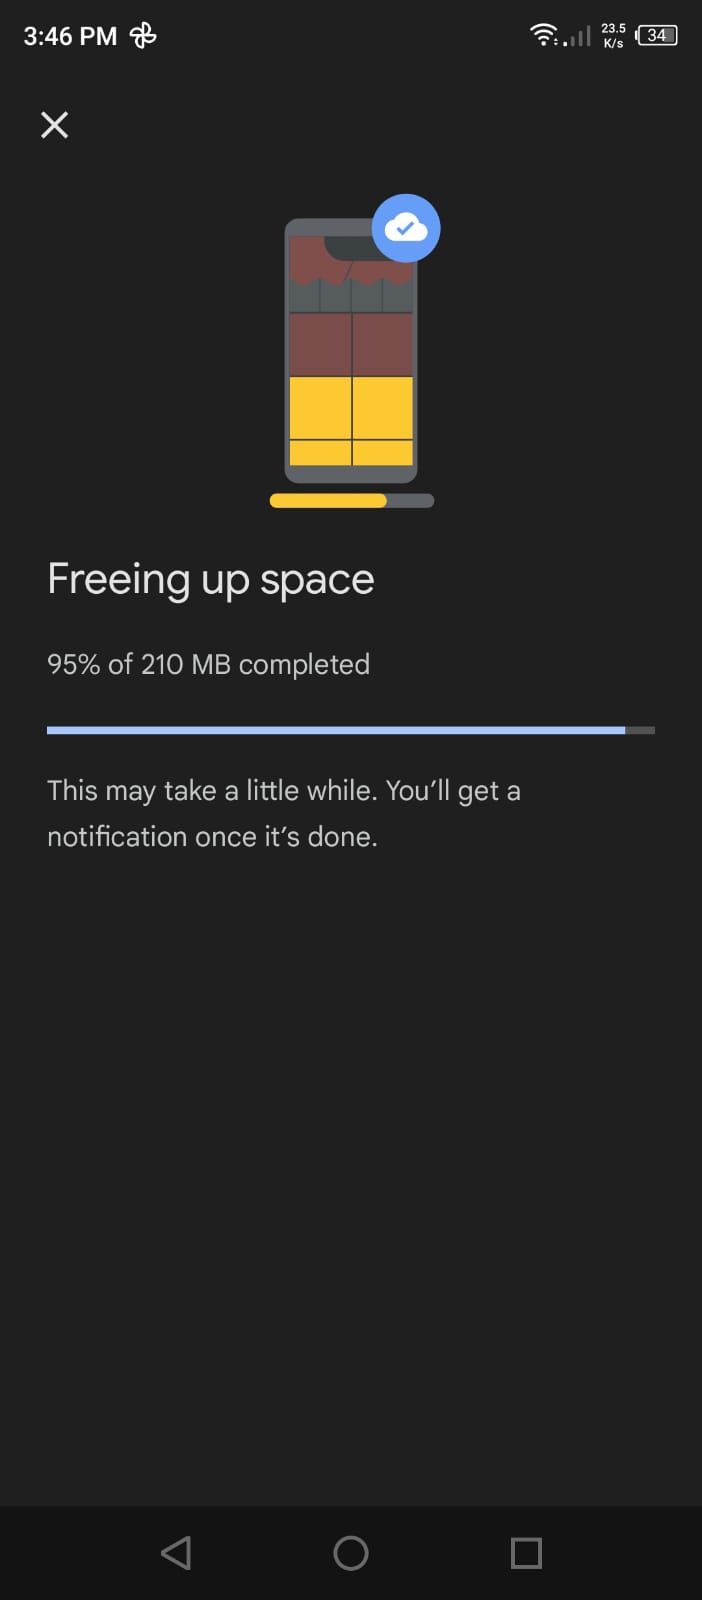 Google Photos App - Free Up Space Screen